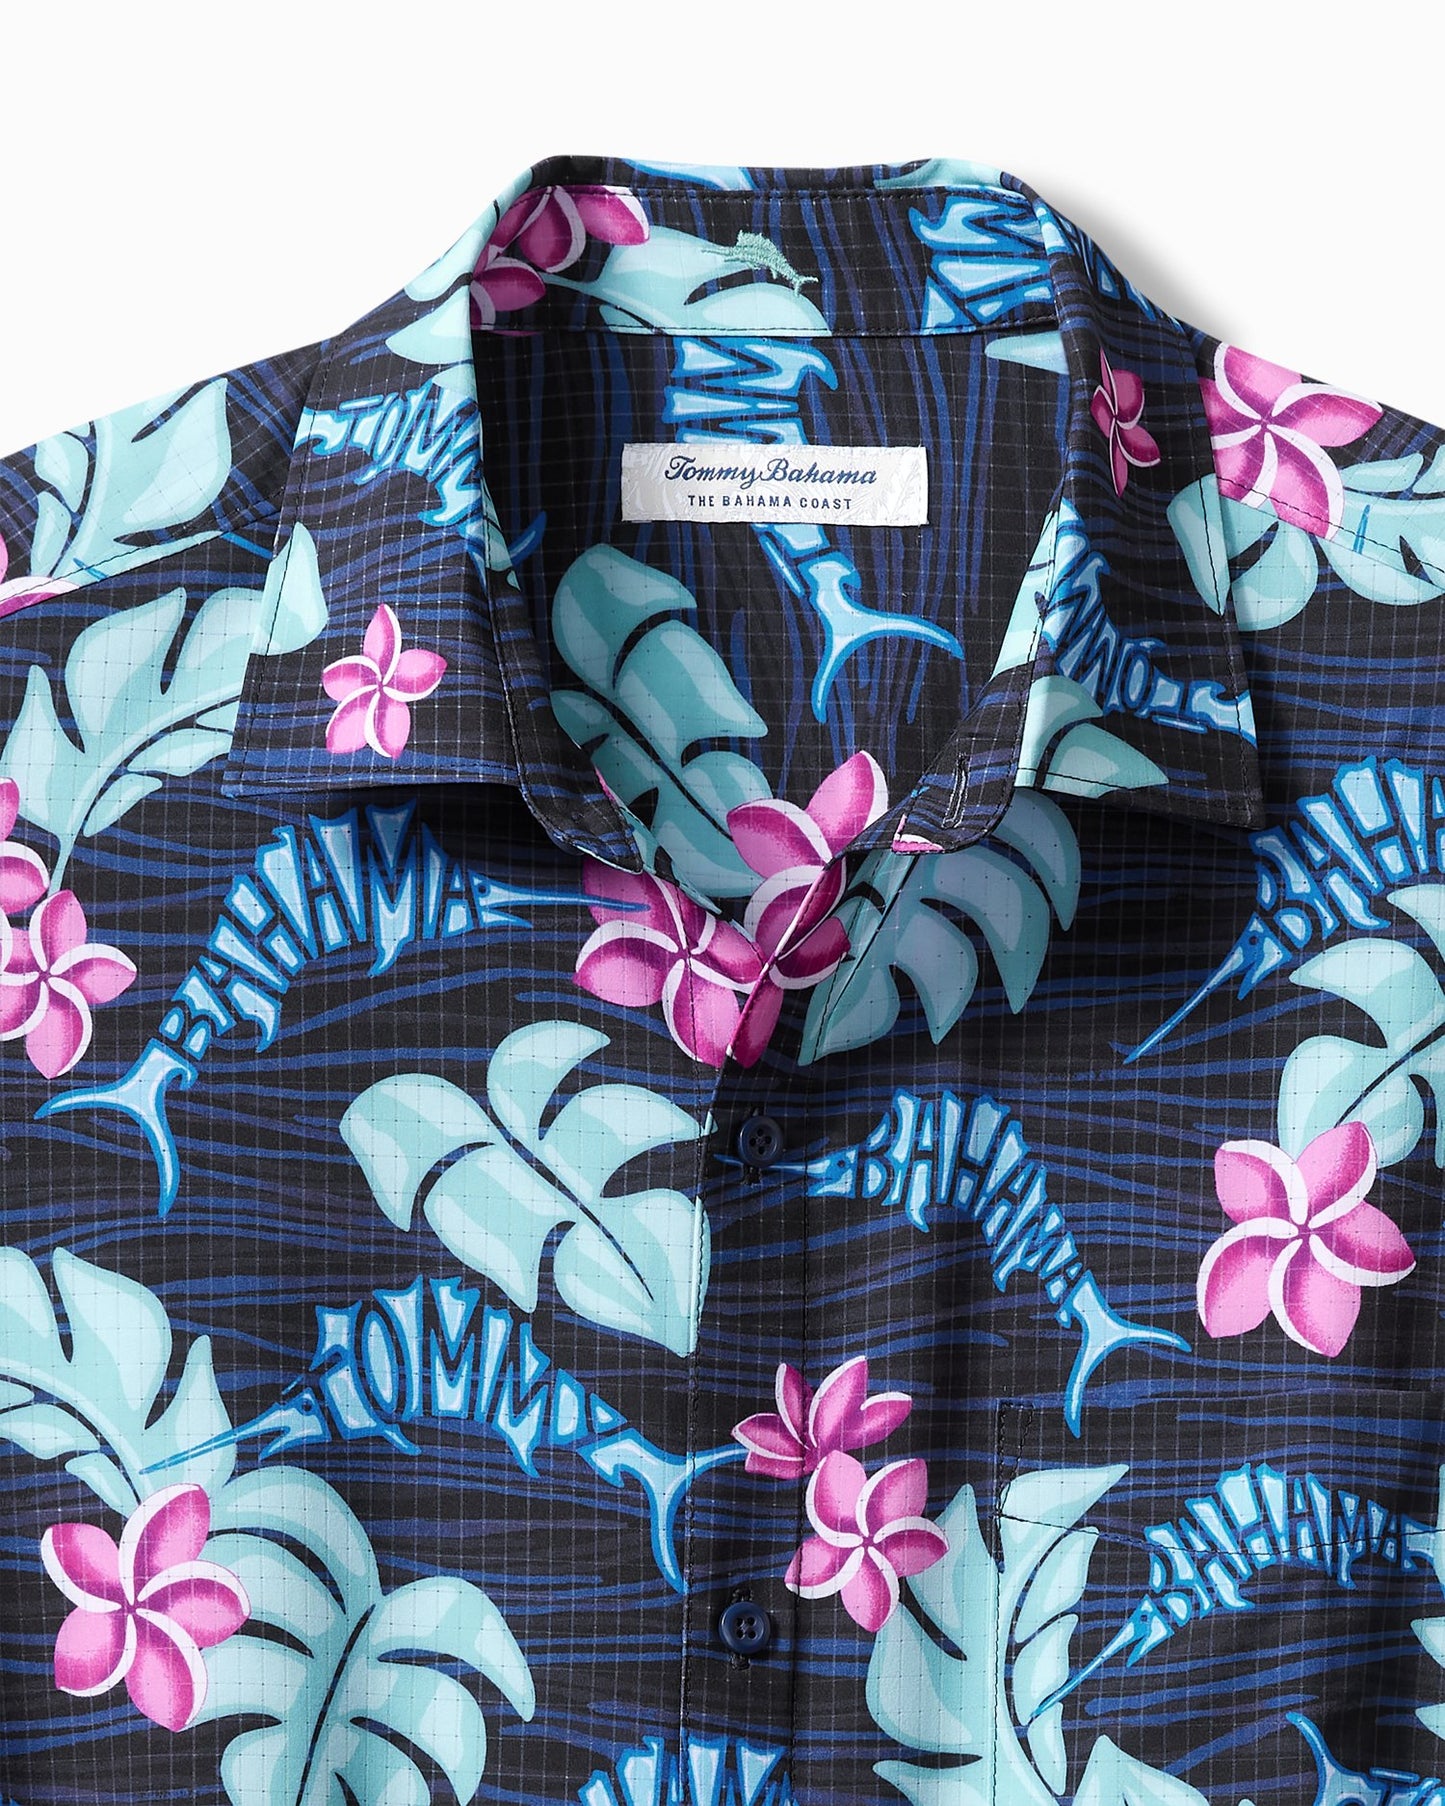 Tommy Bahama Bahama Coast The Marlin Life IslandZone Short-Sleeve Shirt